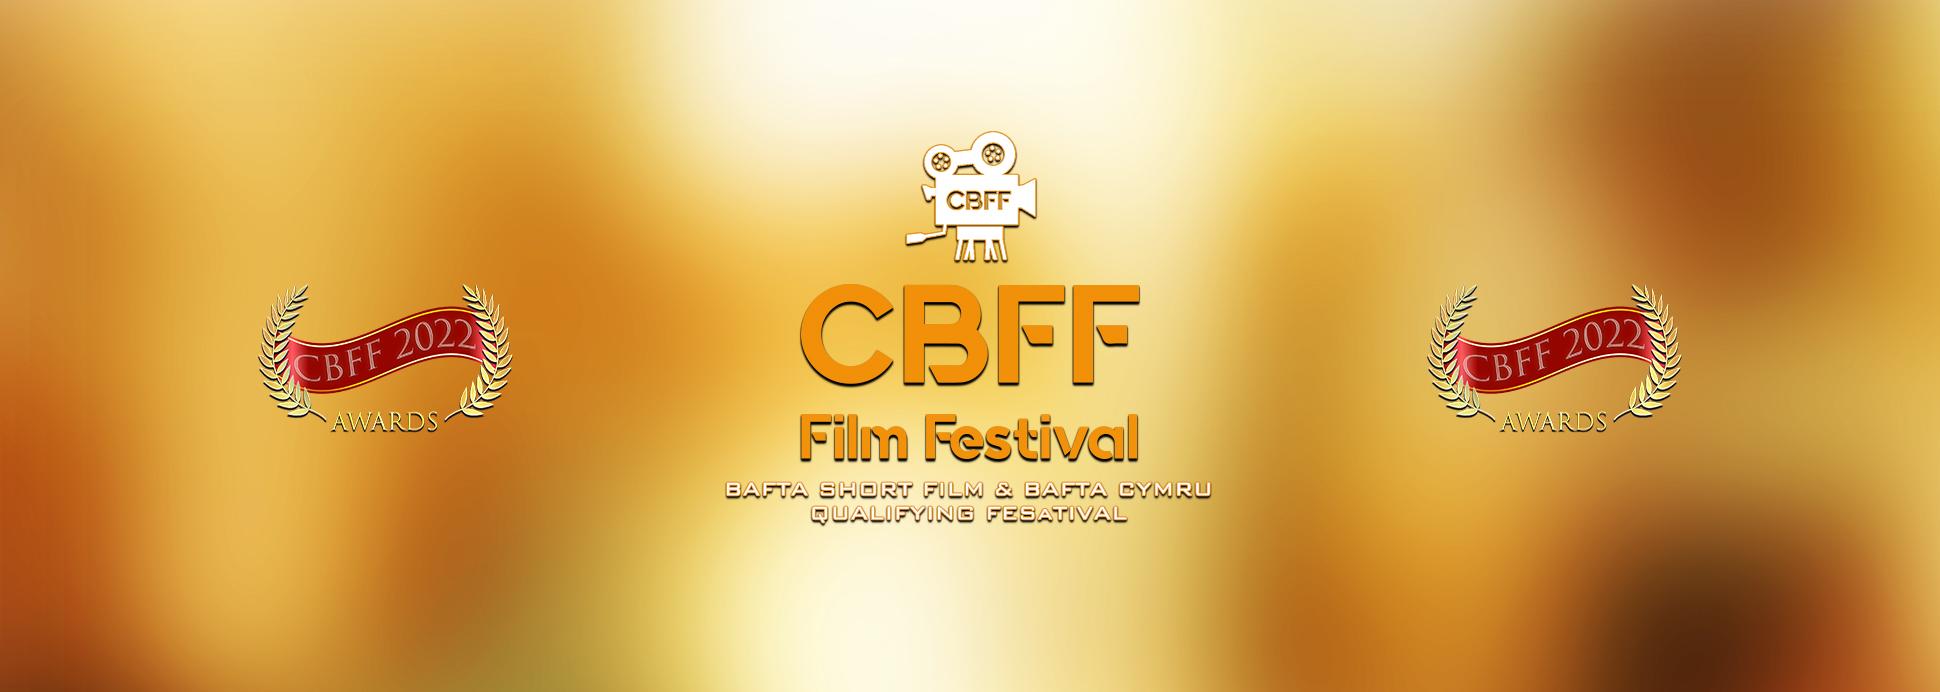 Carmarthen Bay Film Festival 2022